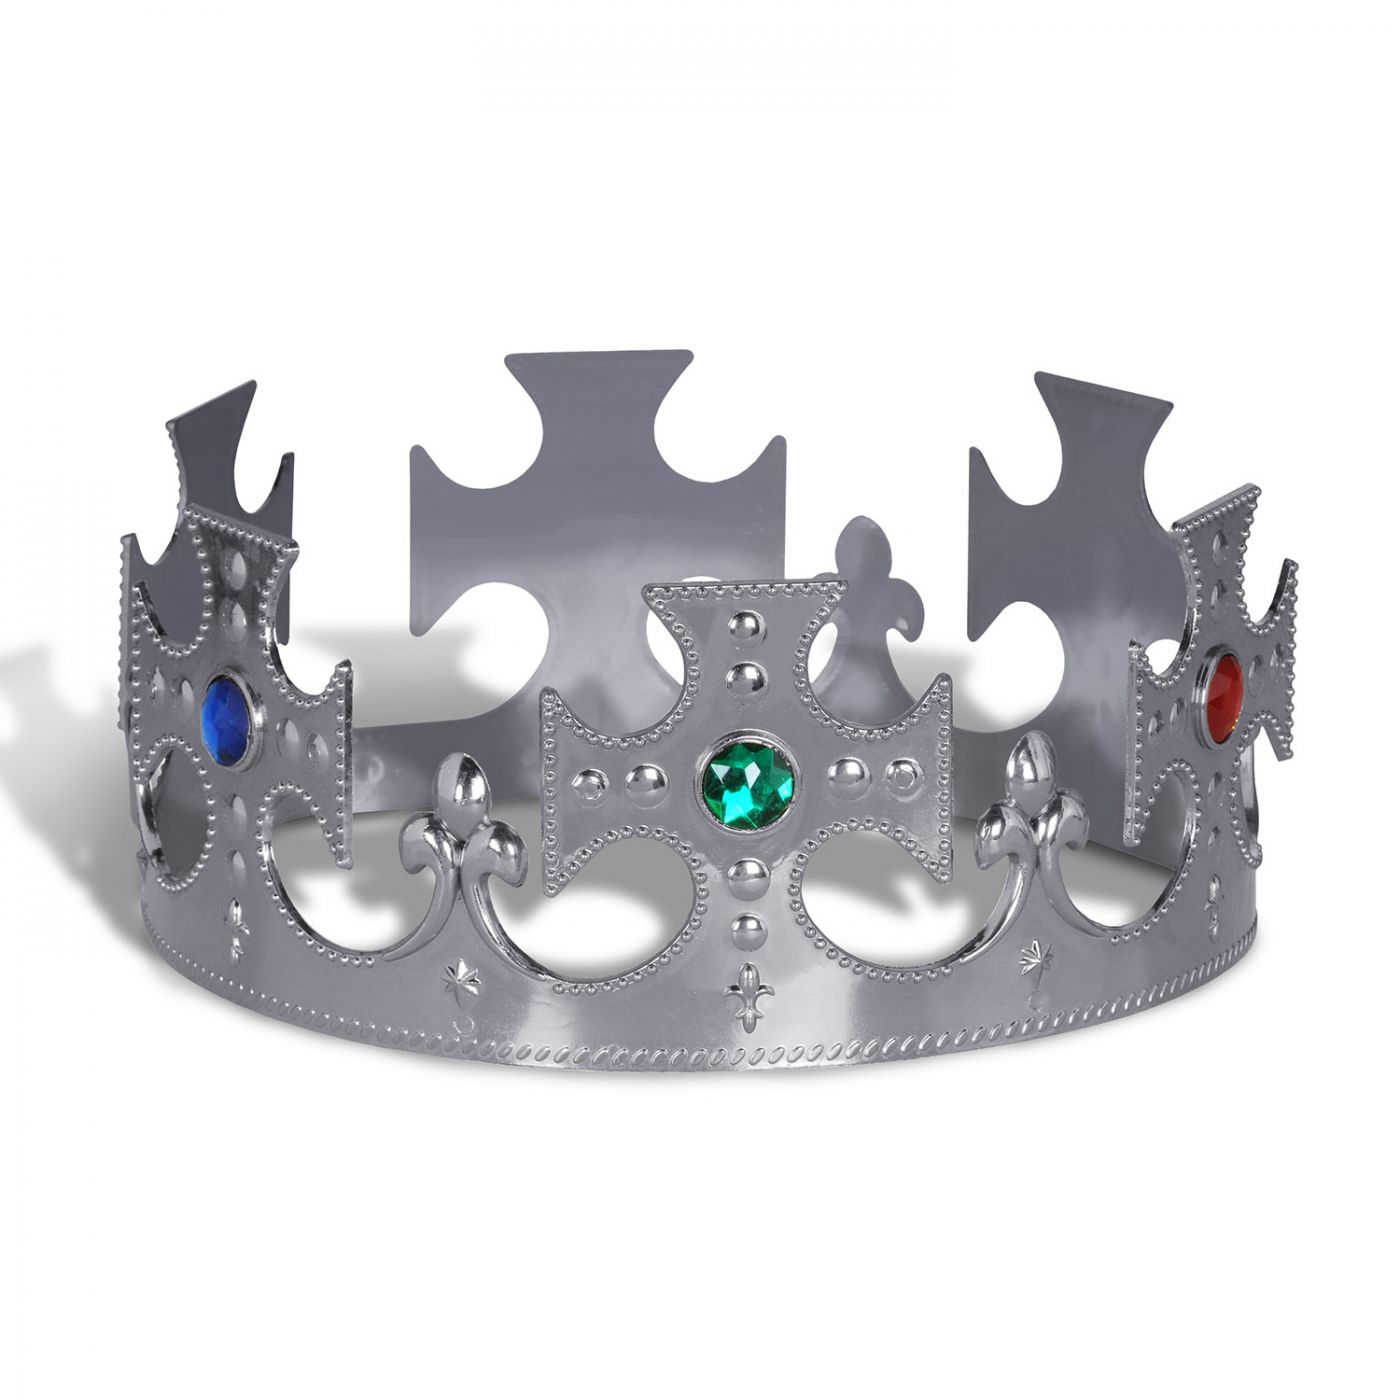 Plastic Jeweled King's Crown image